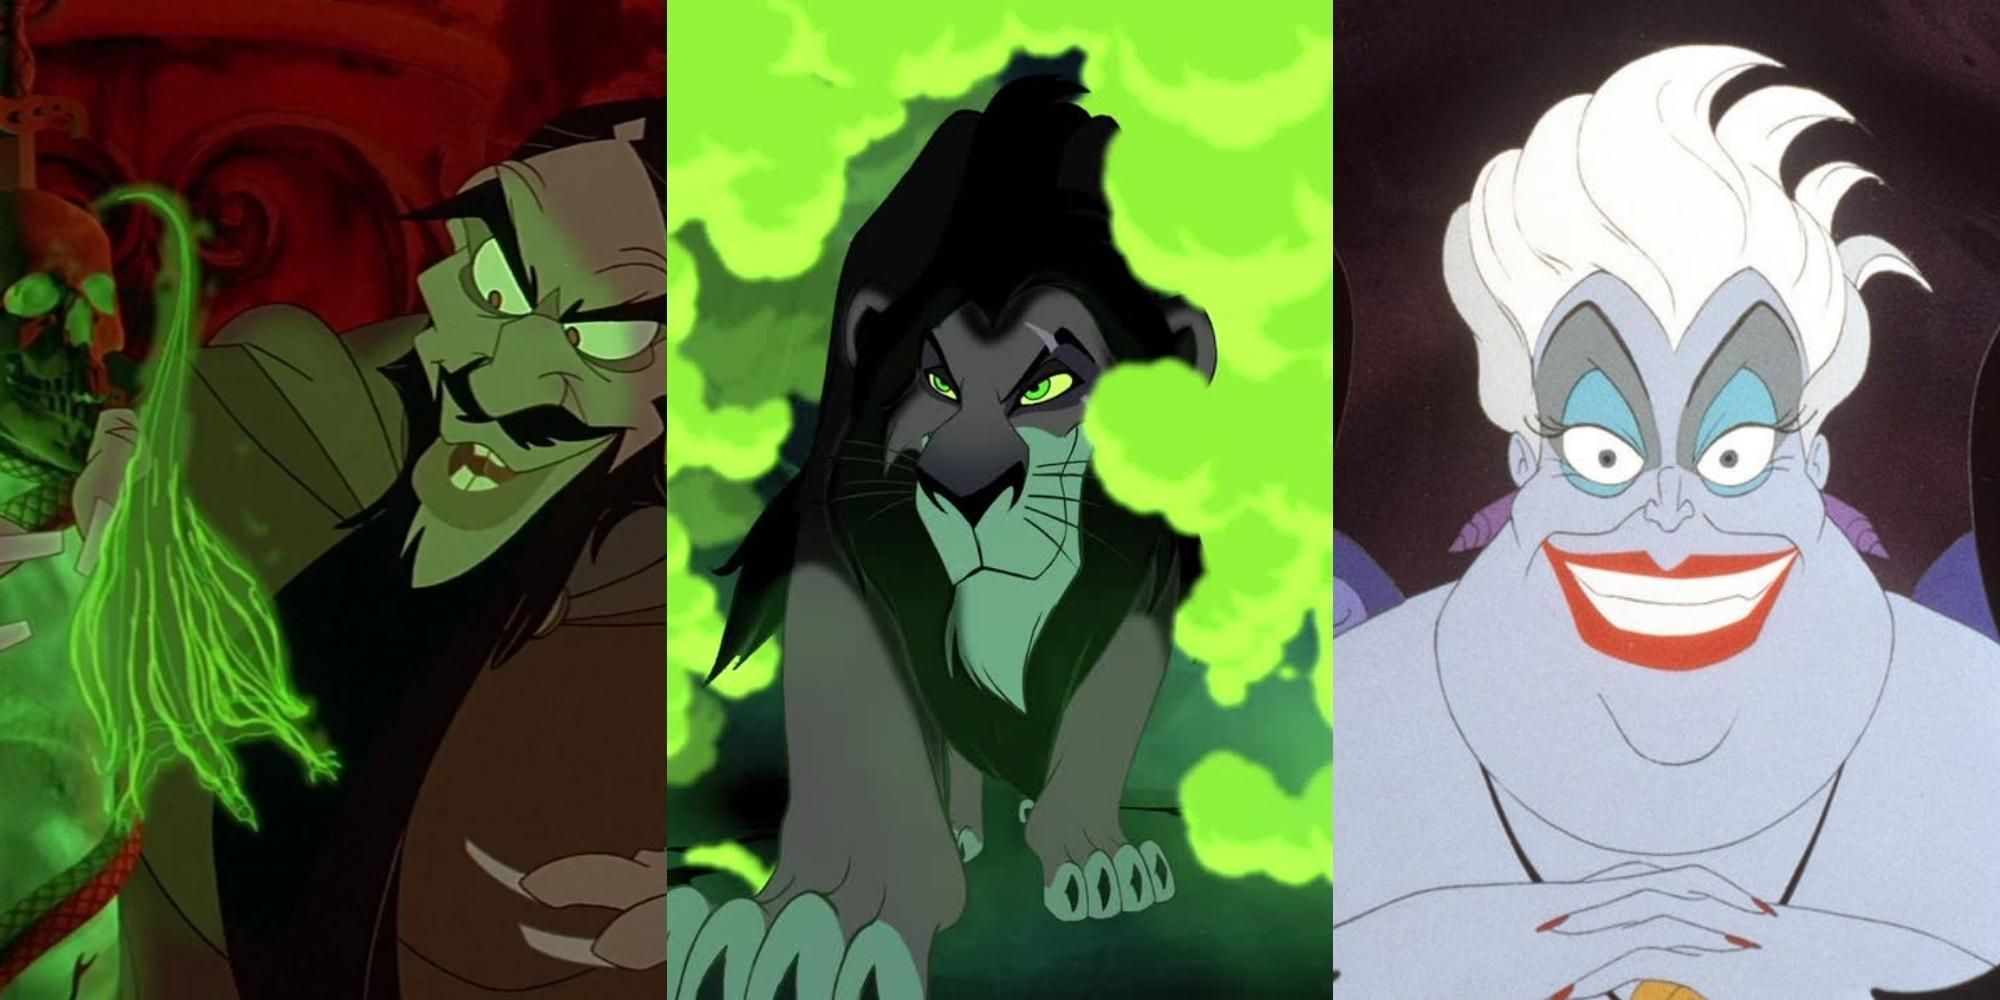 Grigori Rasputin in Anastasia, Scar in The Lion King, Ursula in The Little Mermaid